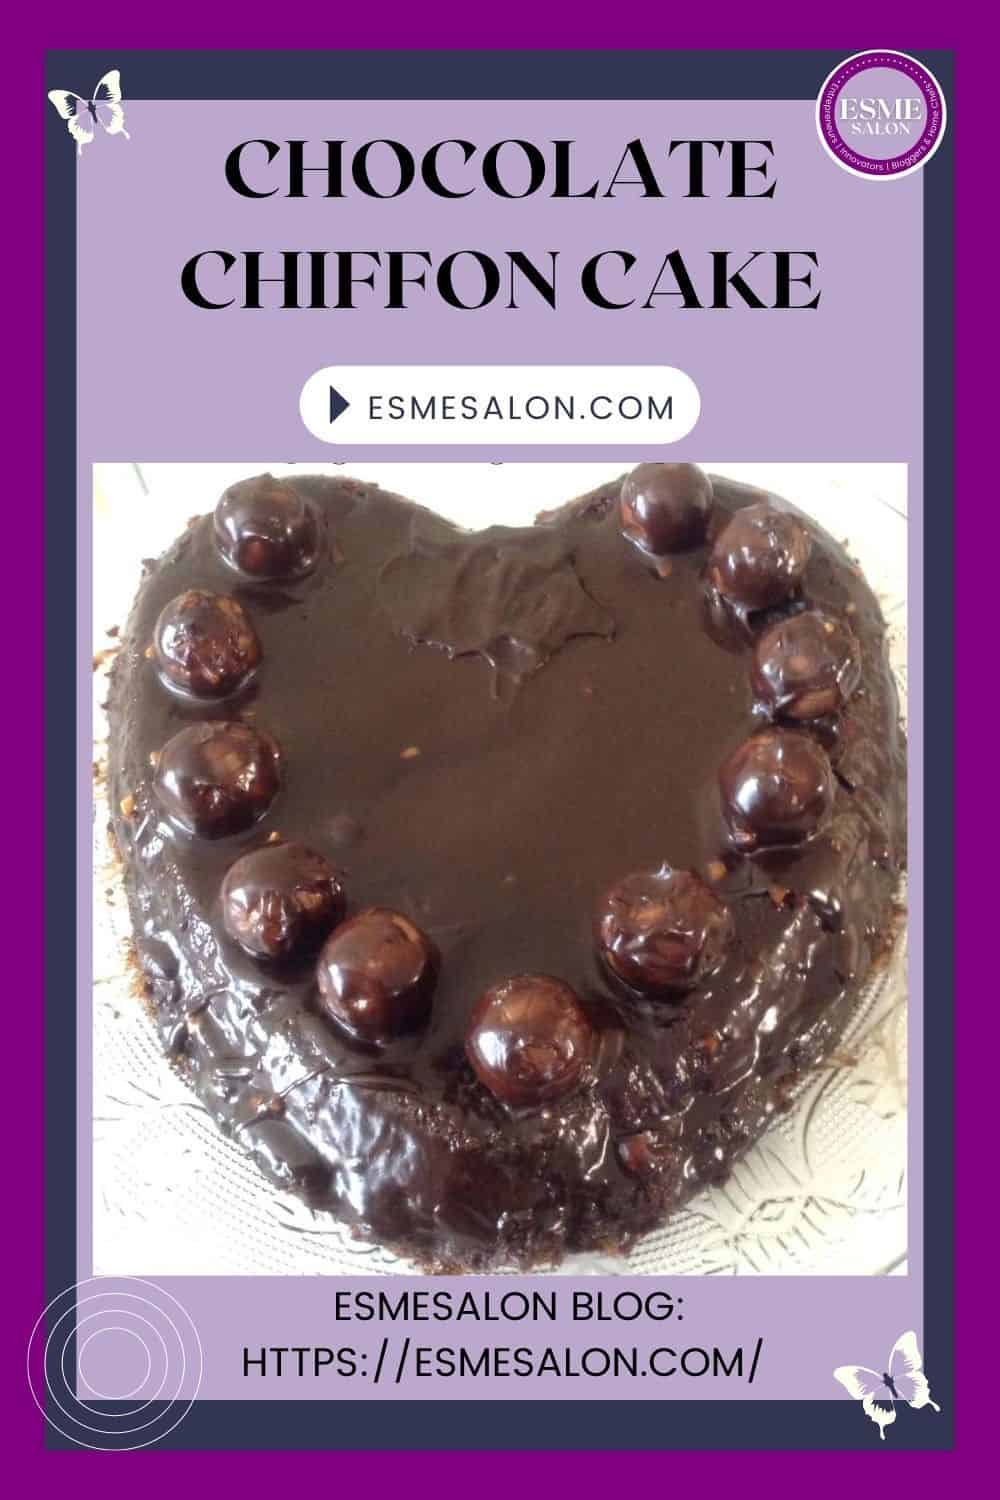 An image of a heart shaped Chocolate Chiffon Cake